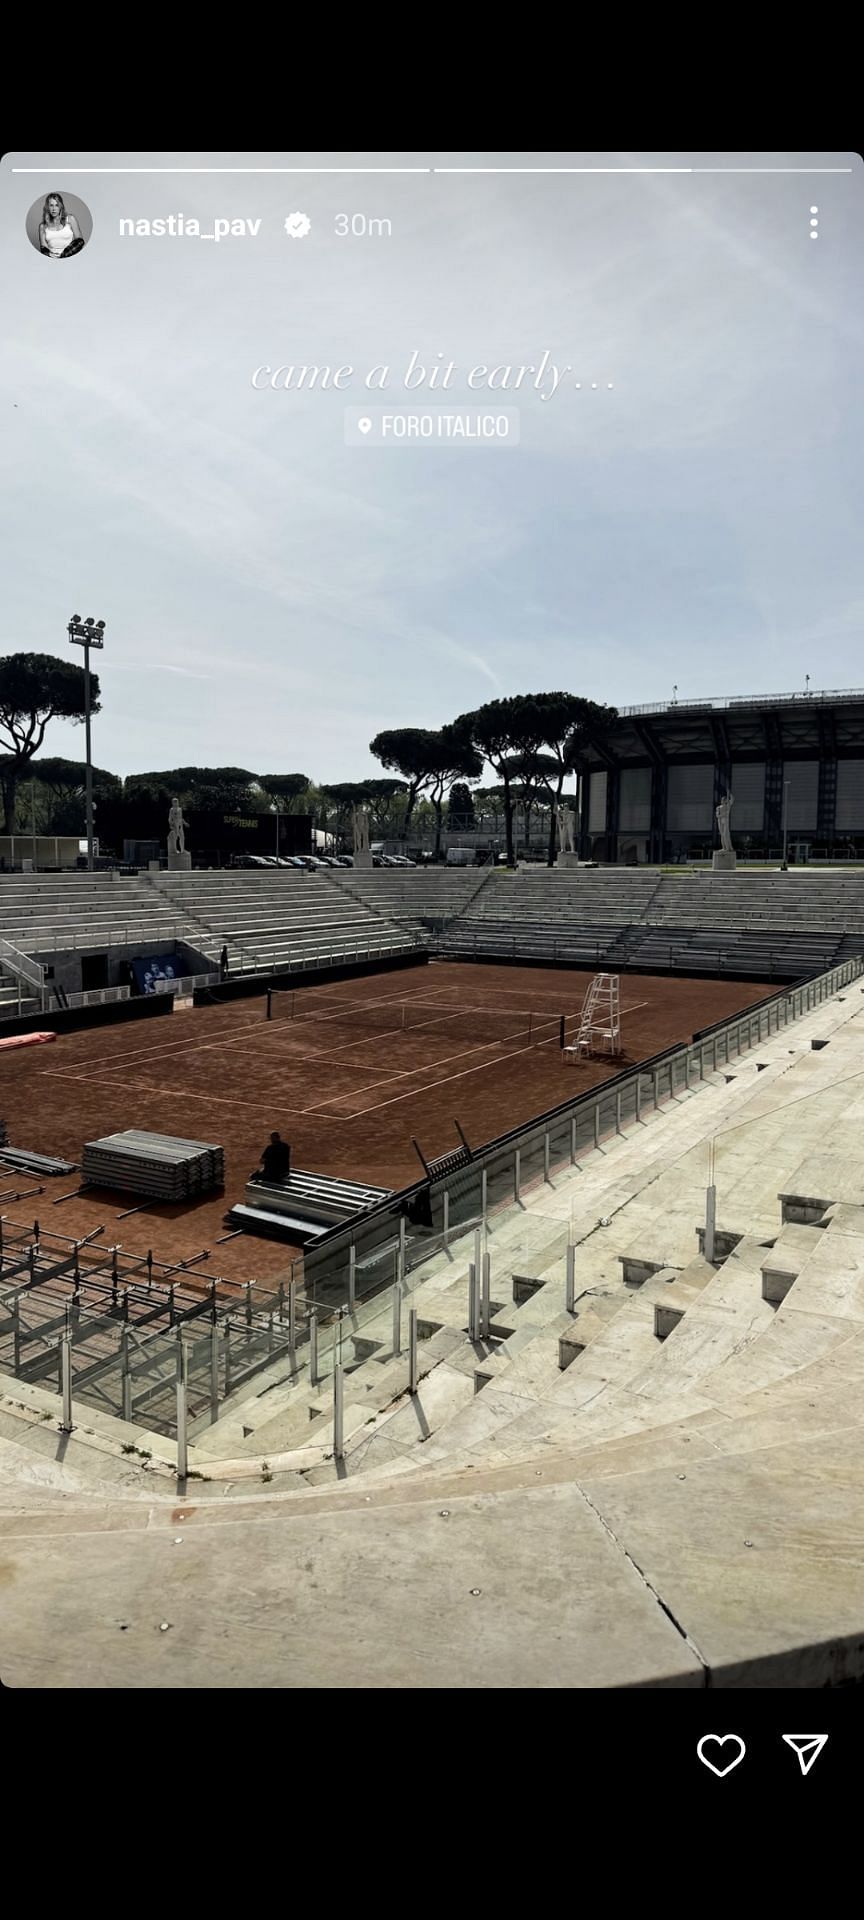 Anastasia Pavlyuchenkova&#039;s Instagram post featuring an empty clay court at the Foro Italico